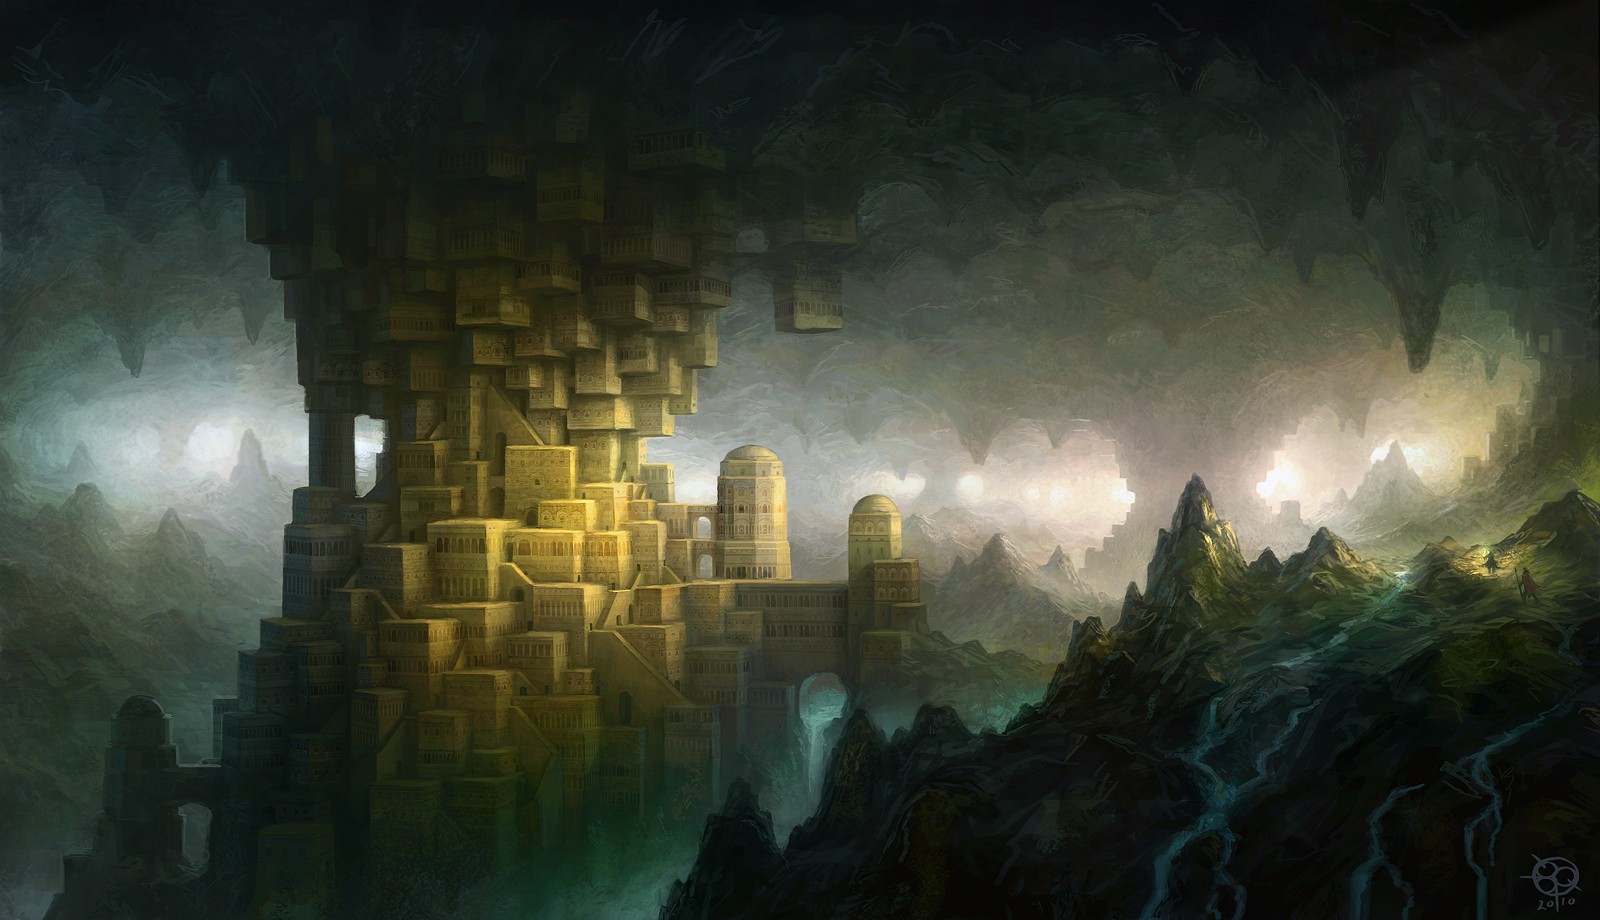 The-Hidden-City-2d-Fantasy-Cave-City-Picture-Image-Digital-Art.jpg